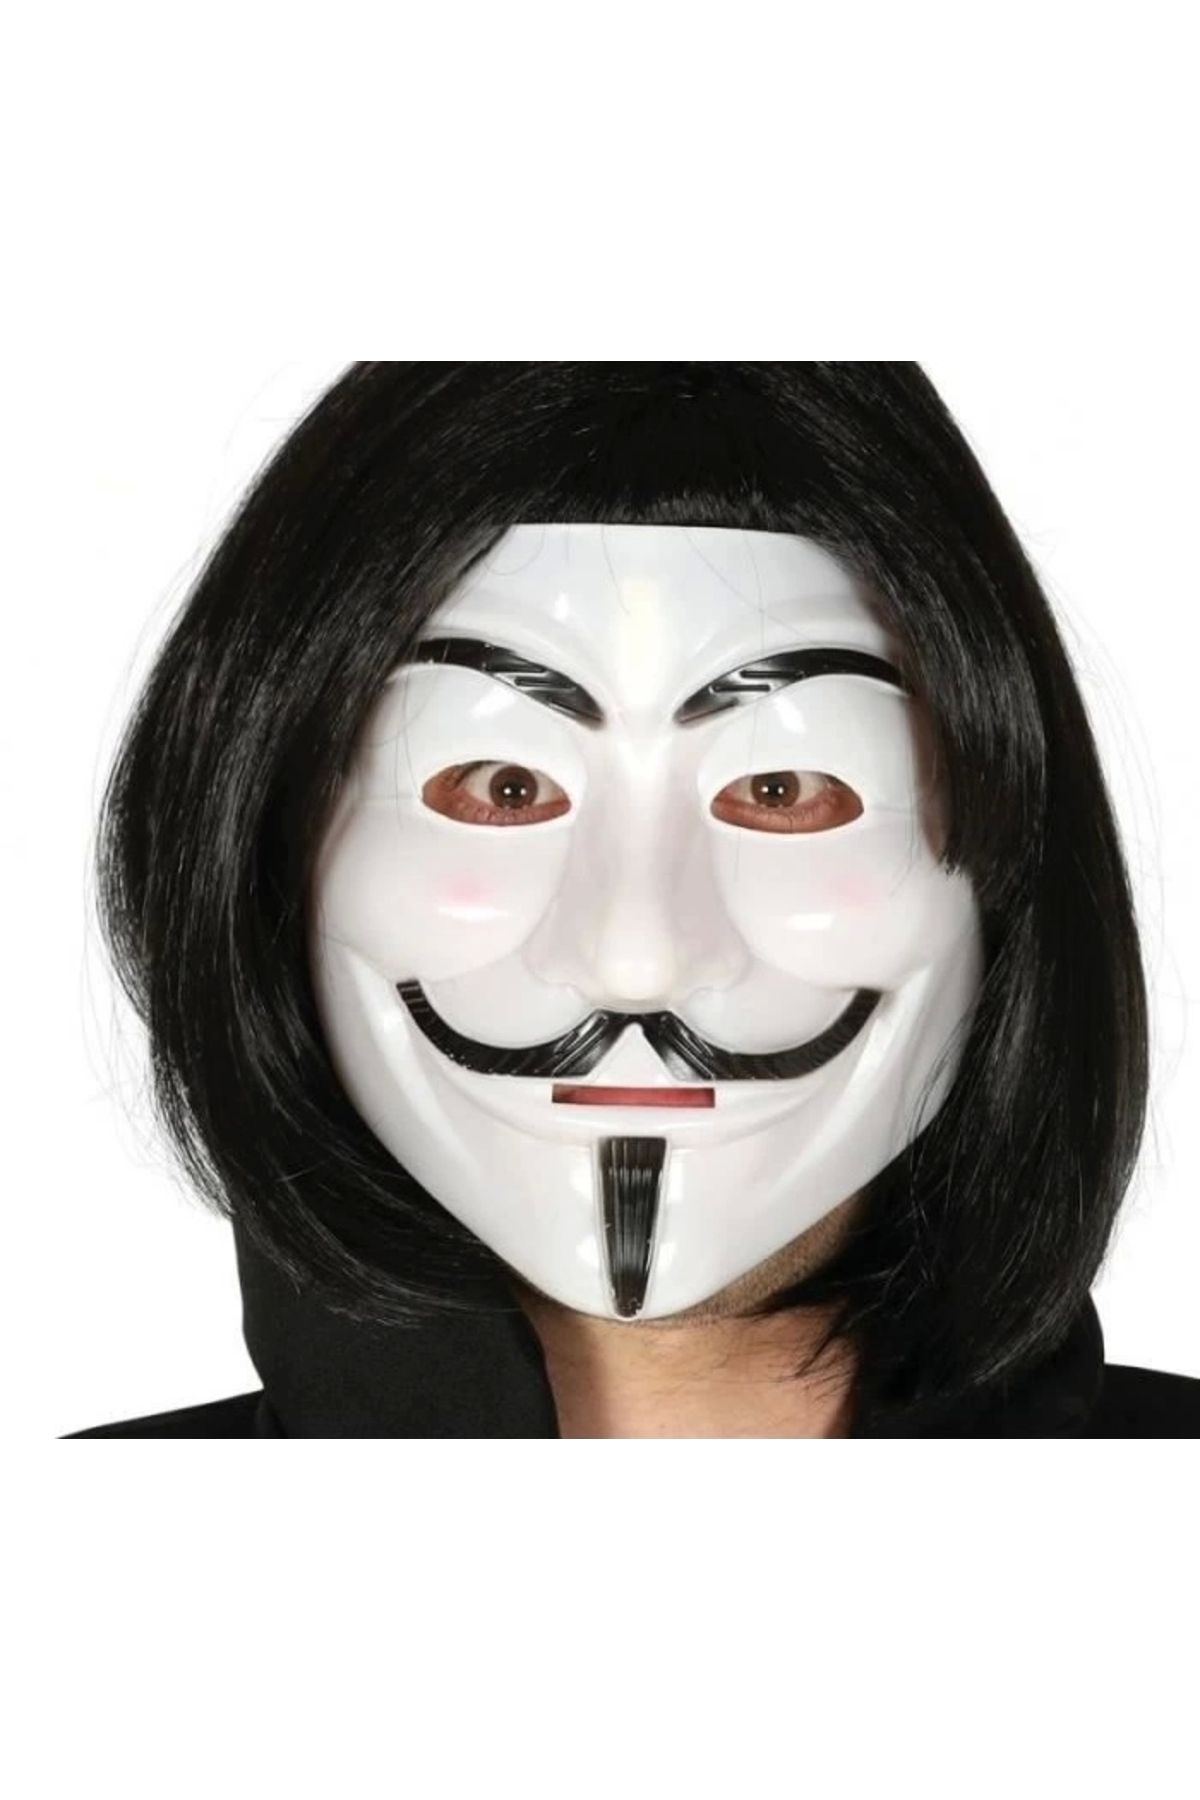 Modaliz Siyah Renk Takma Kısa Saç Ve V For Vendetta Maskesi Anonymous Maskesi